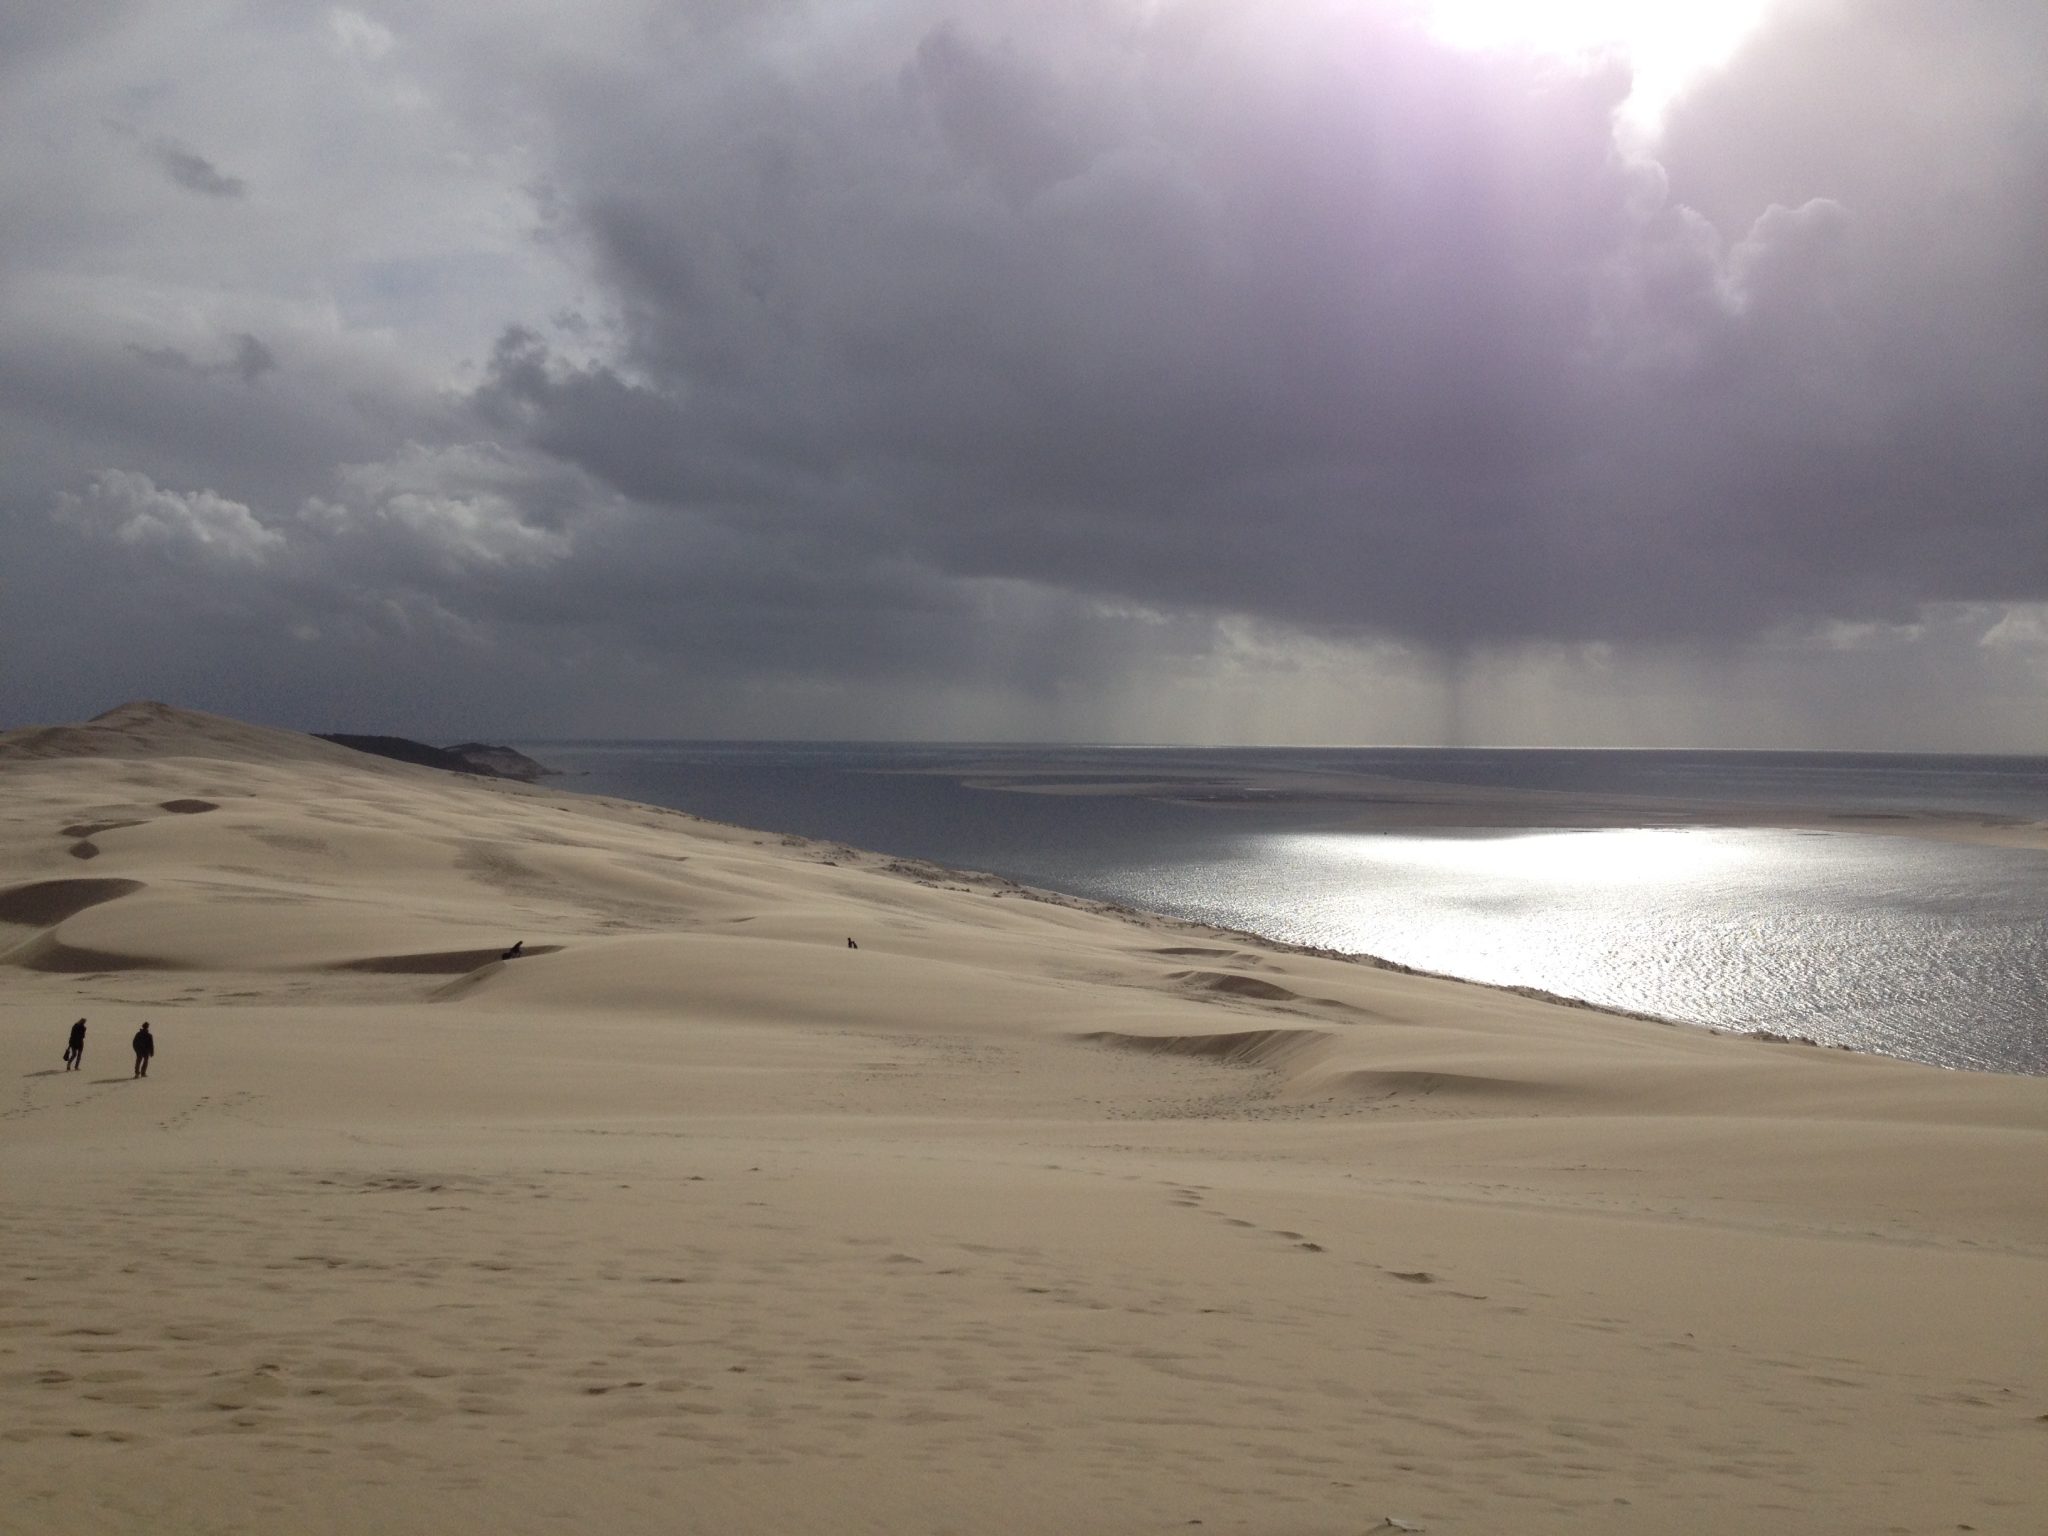 Dune du Pilat, France. Cloudy and rainy